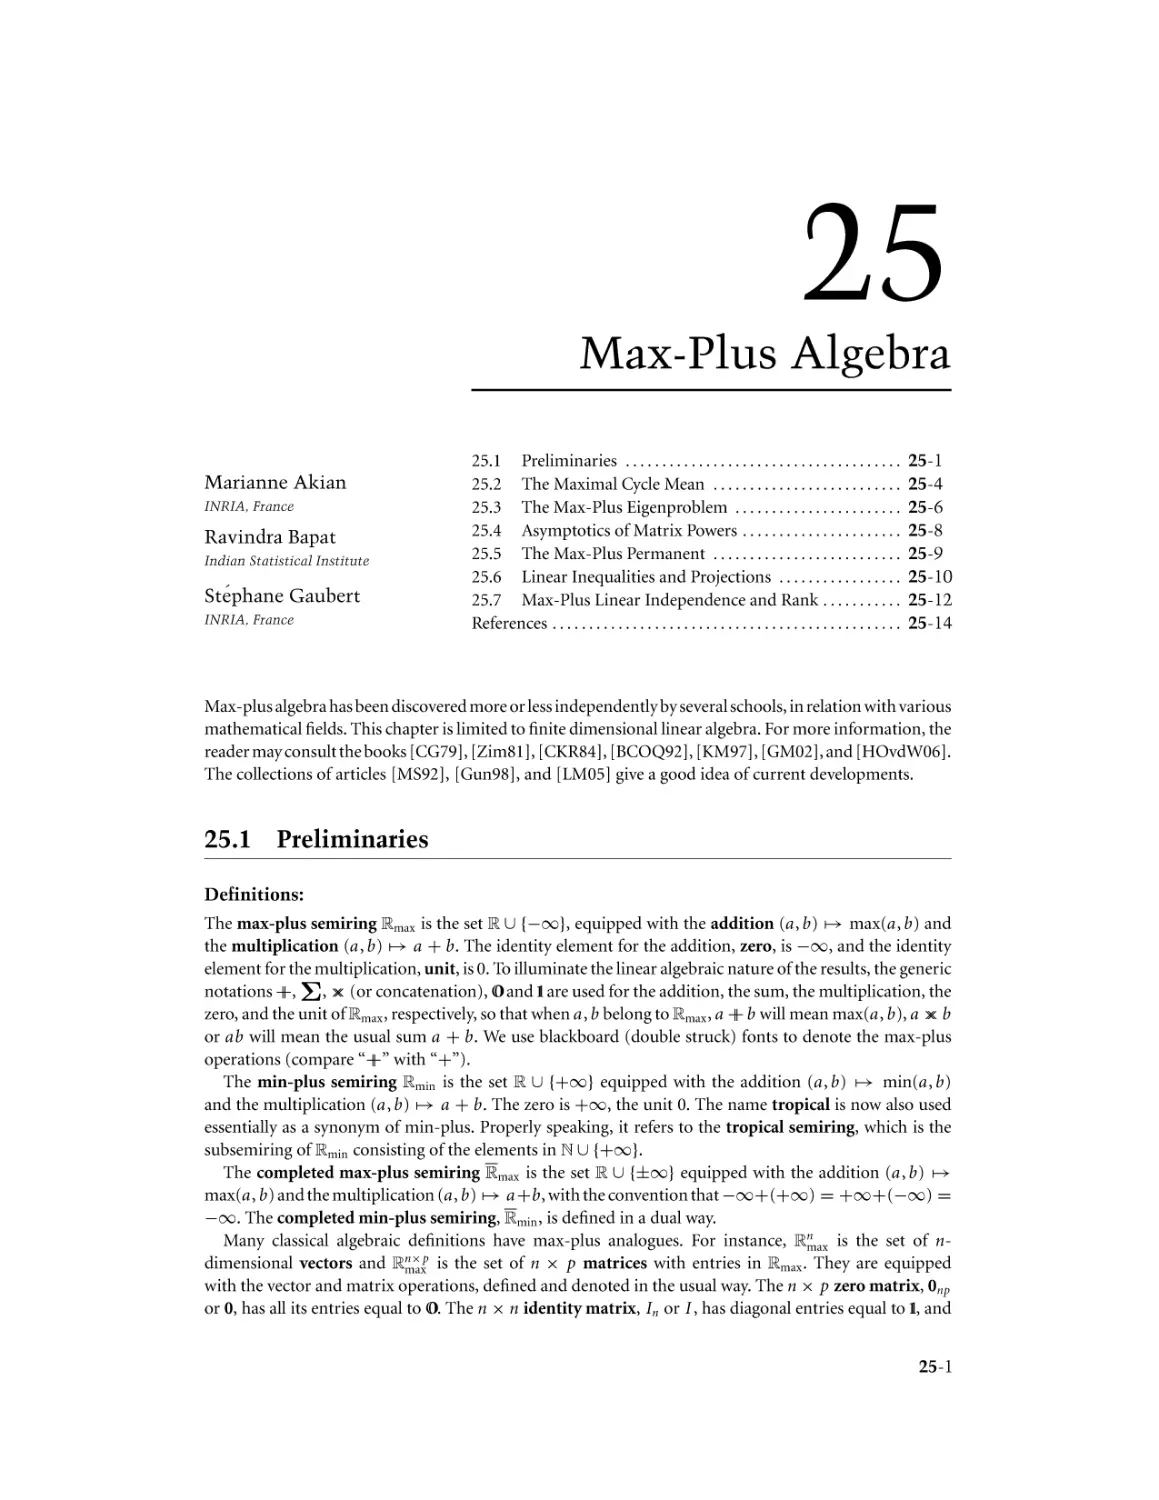 Chapter 25. Max-Plus Algebra